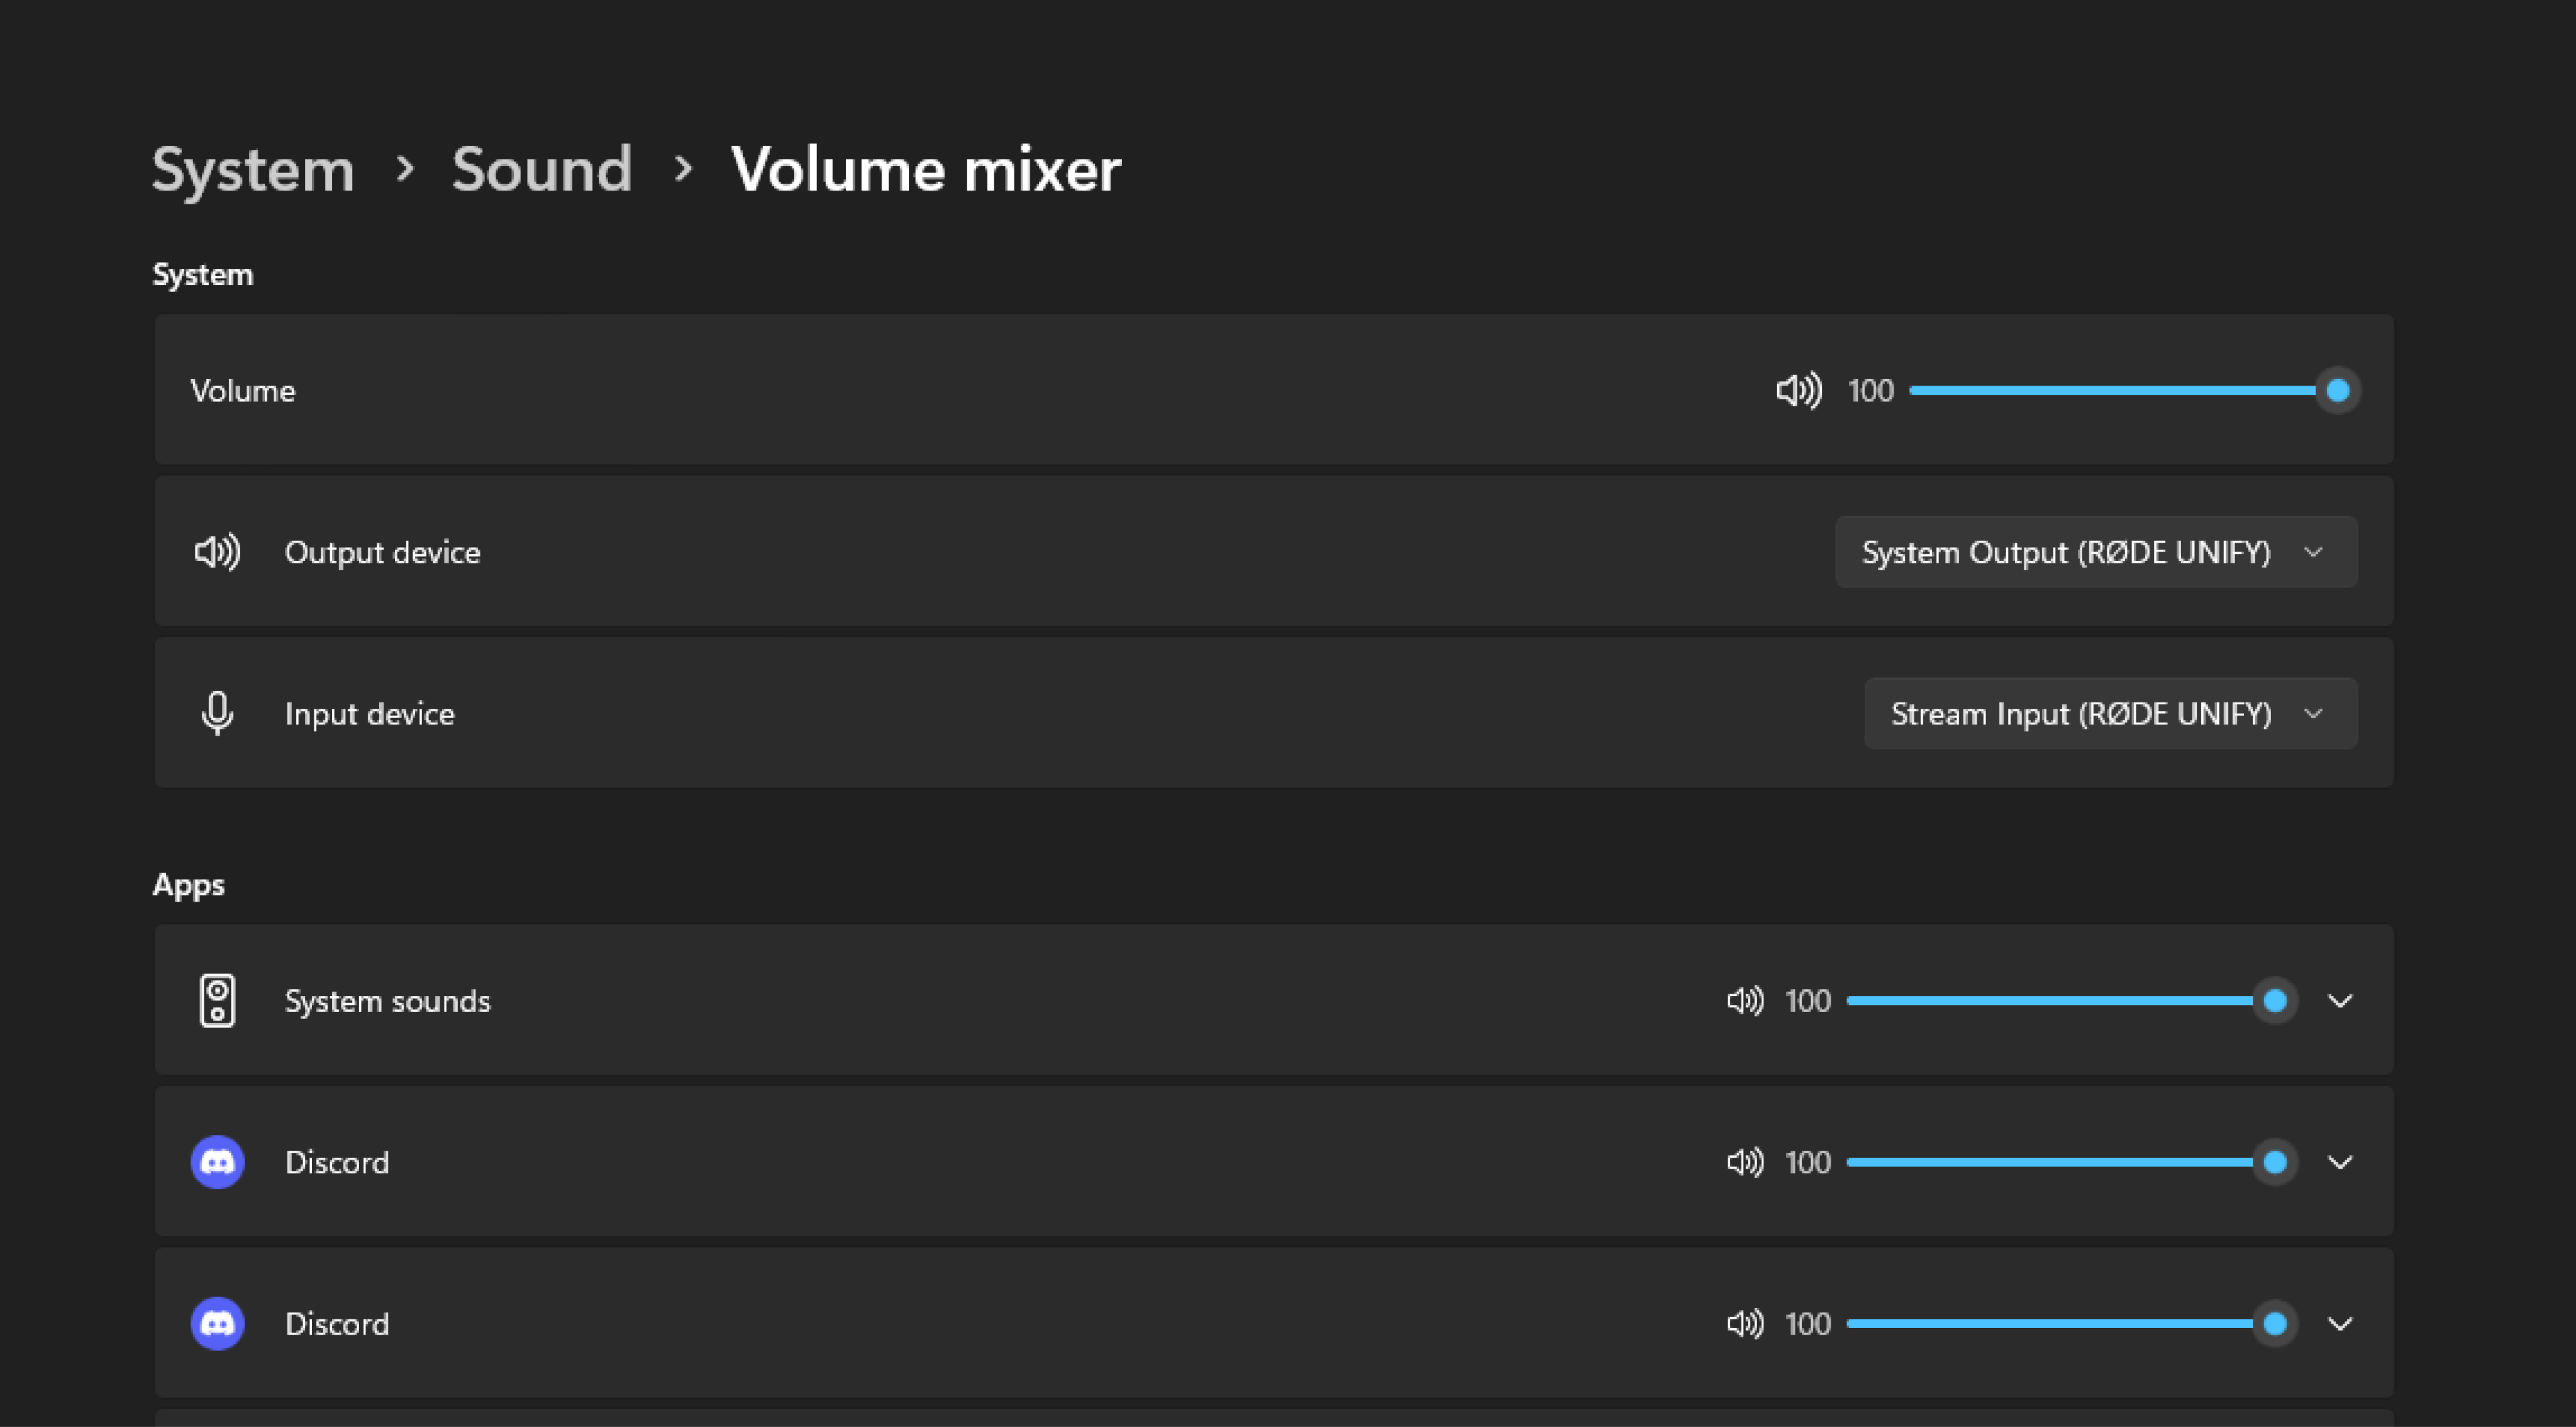 Windows Volume Mixer